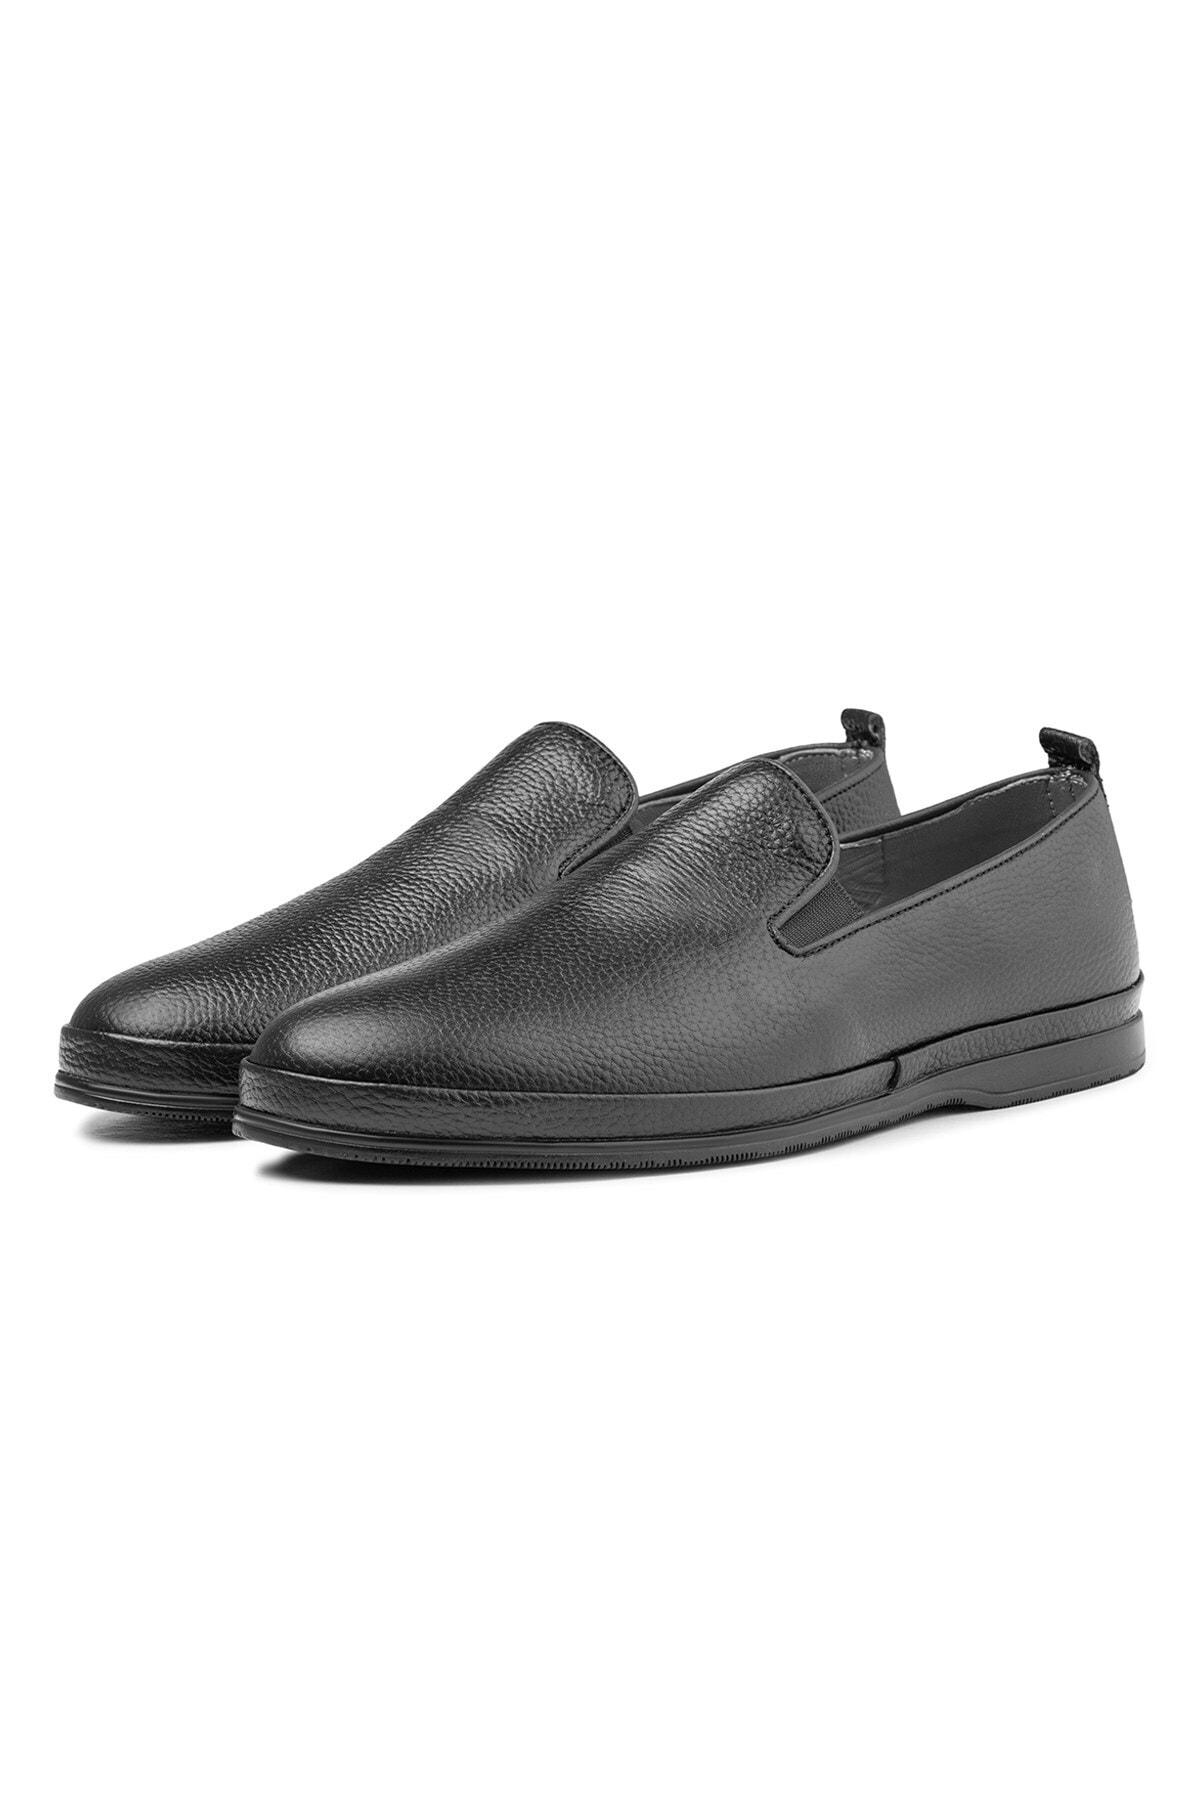 Levně Ducavelli Kante Genuine Leather Comfort Men's Orthopedic Casual Shoes, Dad Shoes, Orthopedic Shoes, Loaf